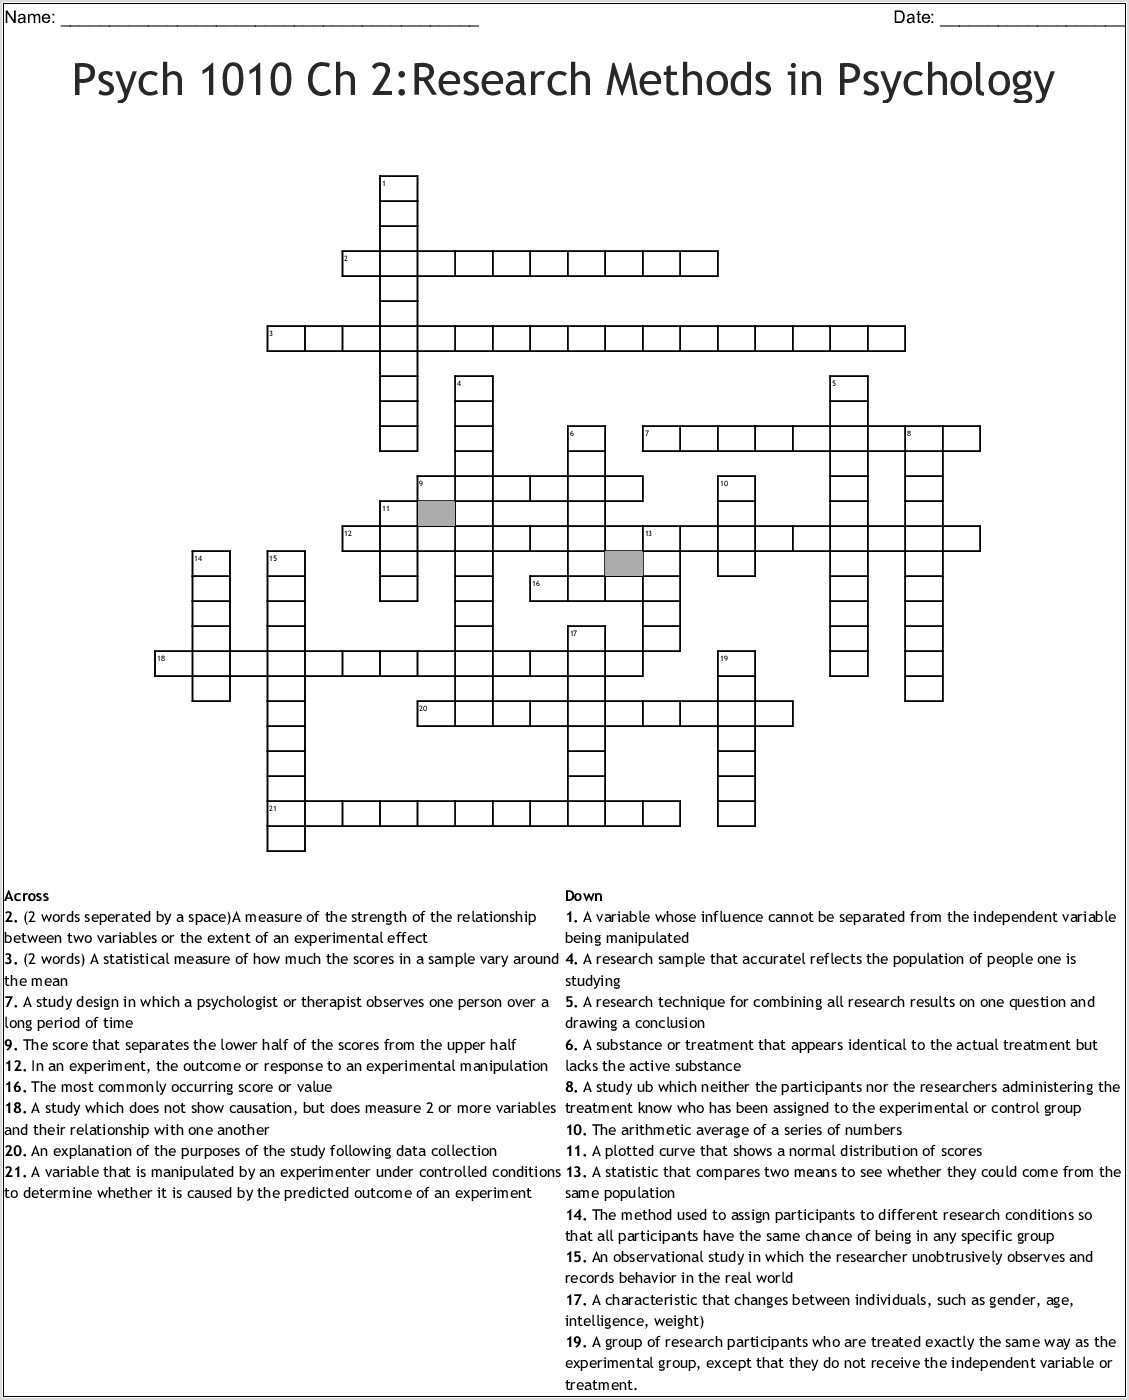 Scientific Method Review Worksheet Crossword Answers